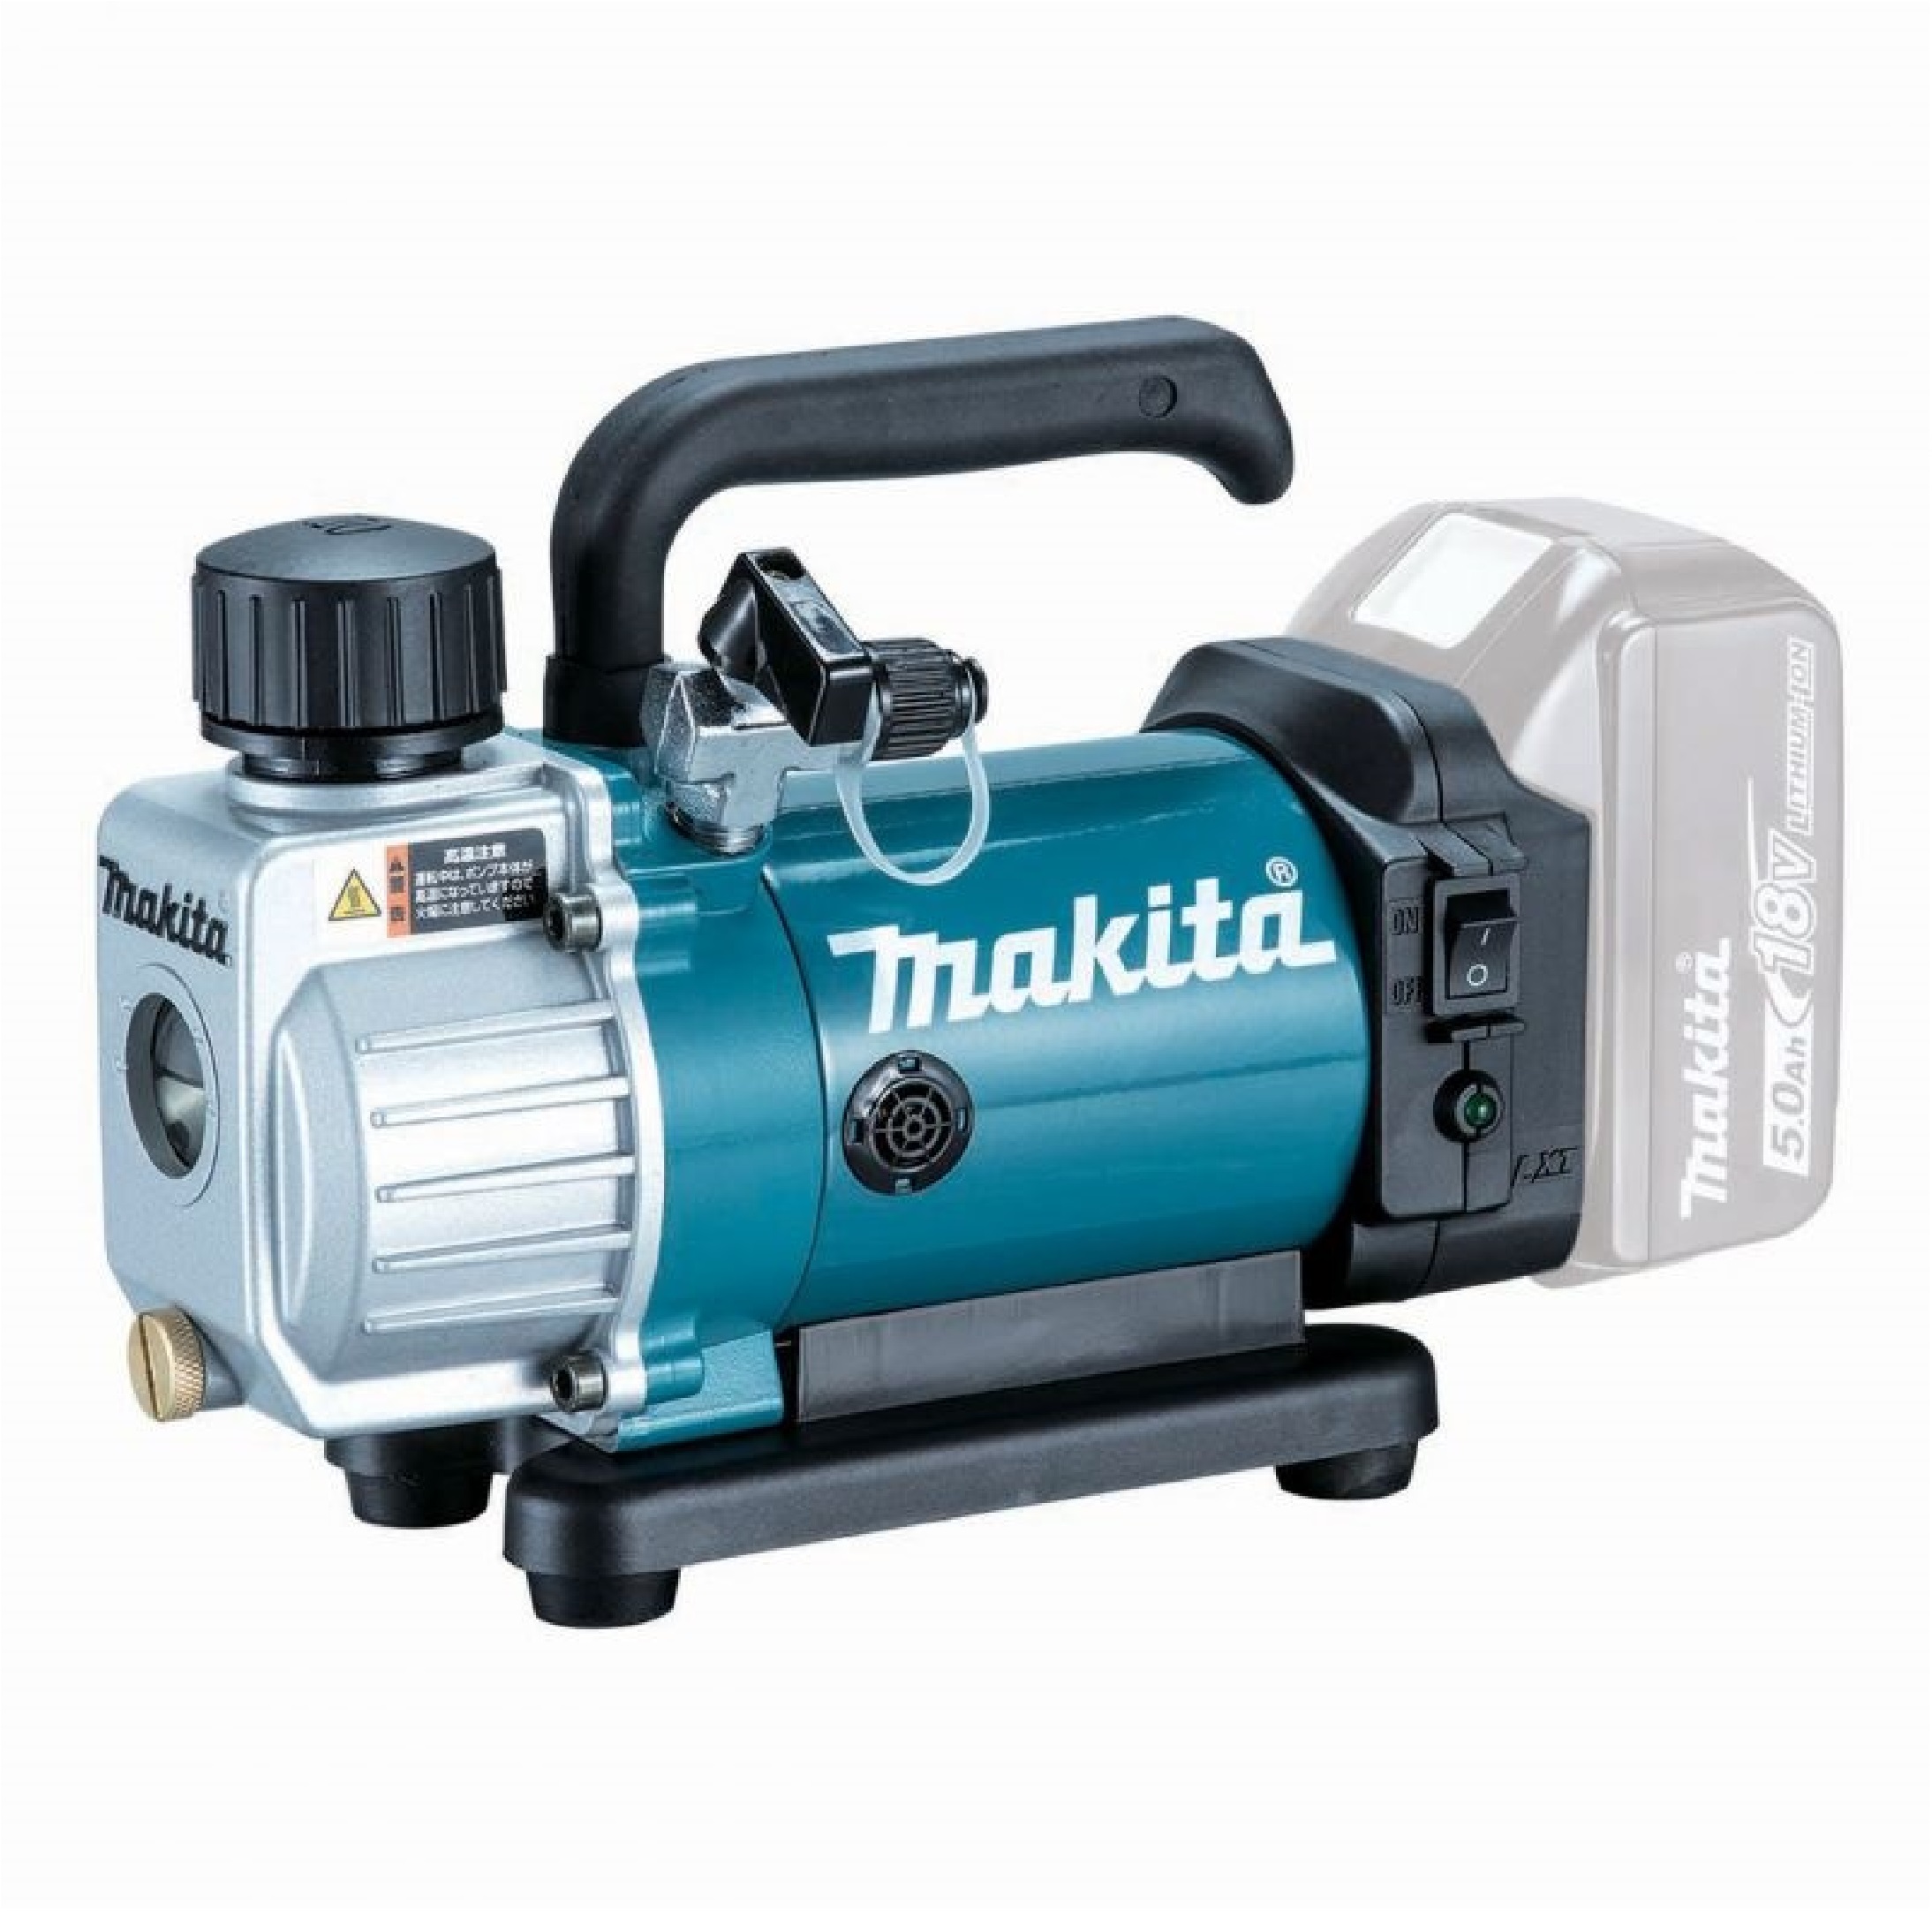 Makita DVP180Z 18V LI-ION Air Condition Vacuum Pump - Bare Unit